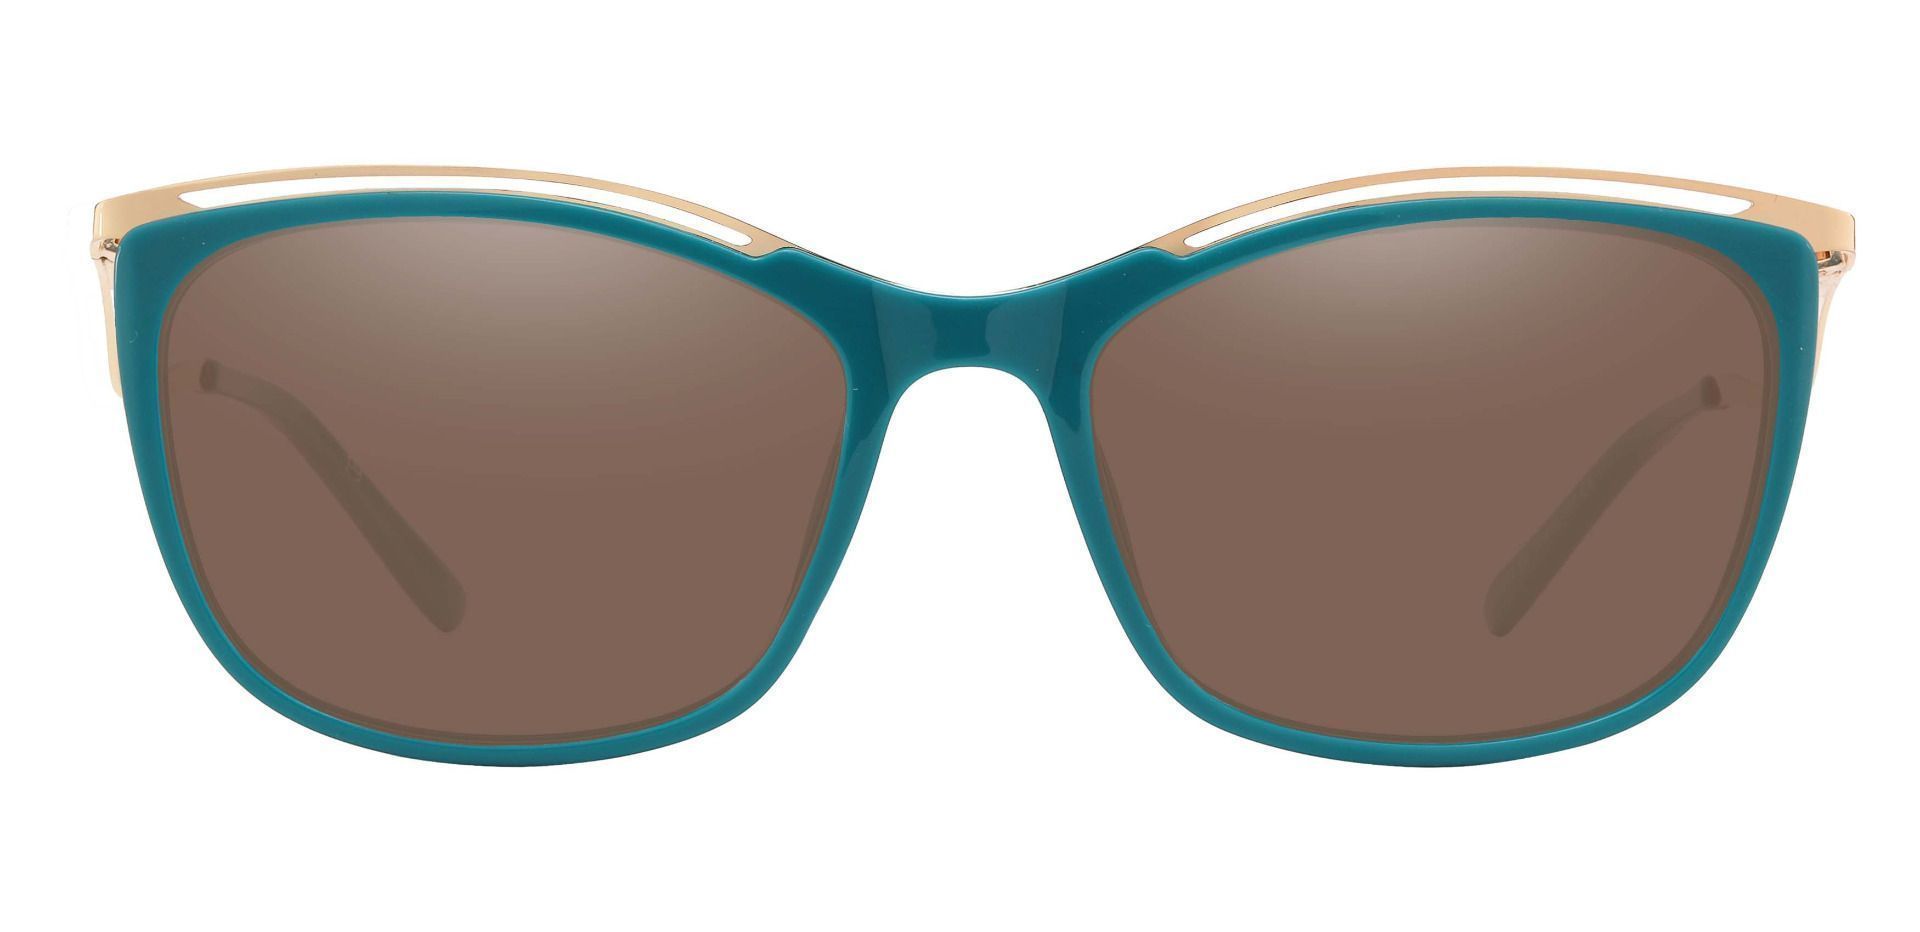 Enola Cat Eye Reading Sunglasses - Green Frame With Brown Lenses